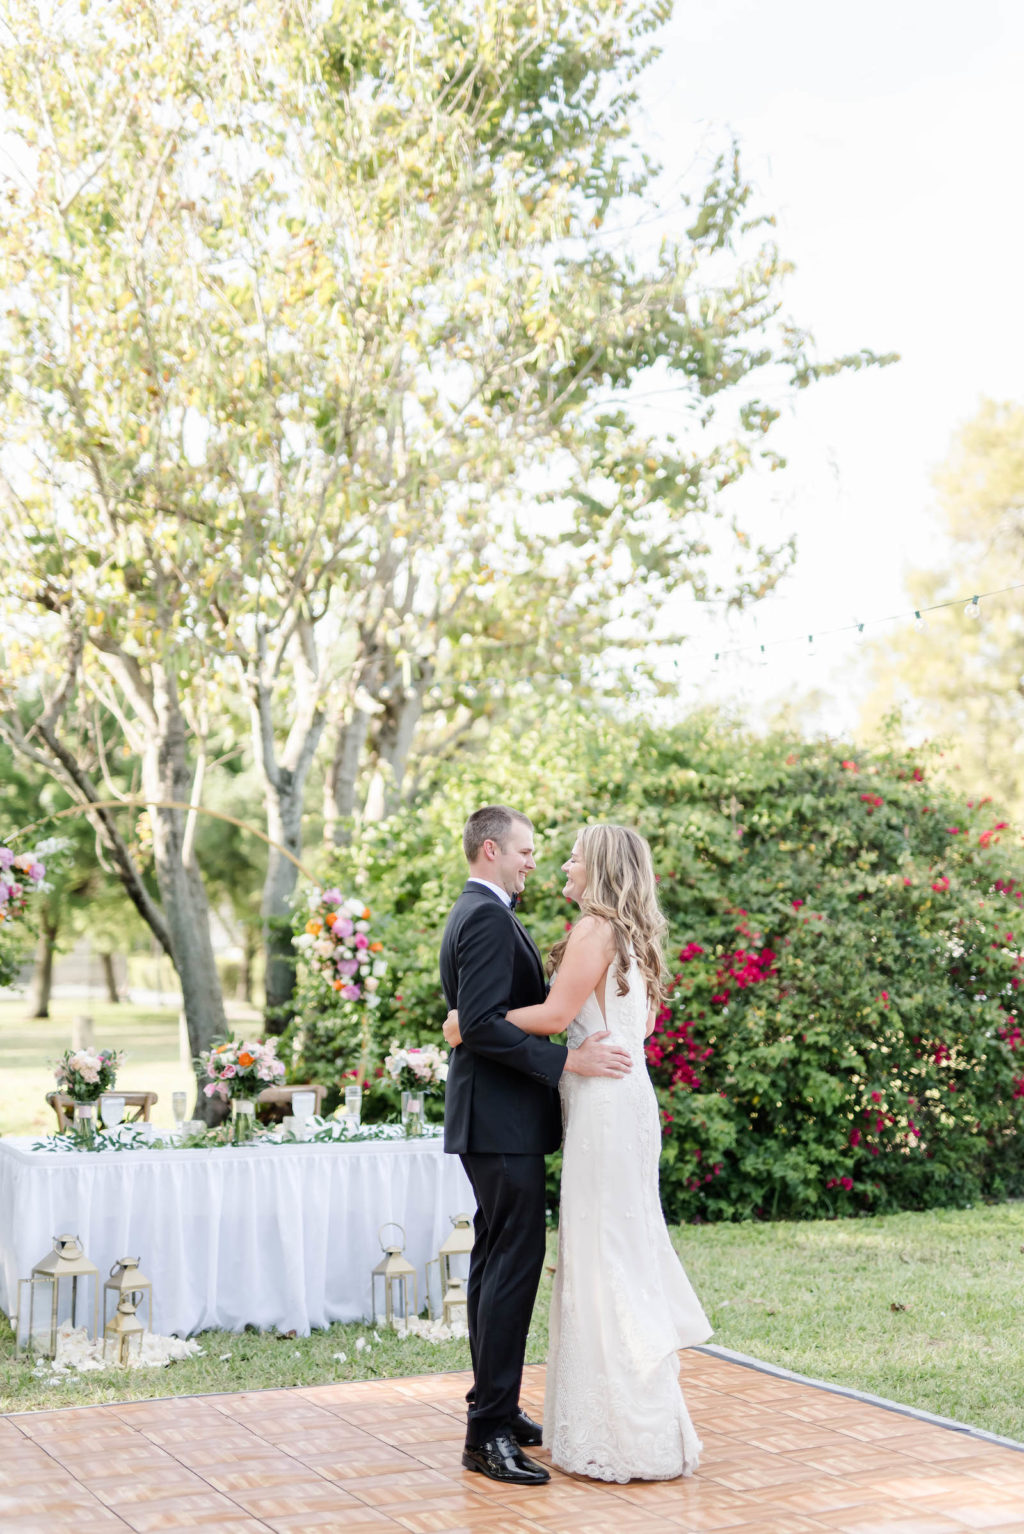 Bride and Groom First Dance Photo | Tampa Bay Wedding DJ Grant Hemond & Associates | Outdoor Garden Venue Davis Islands Garden Club